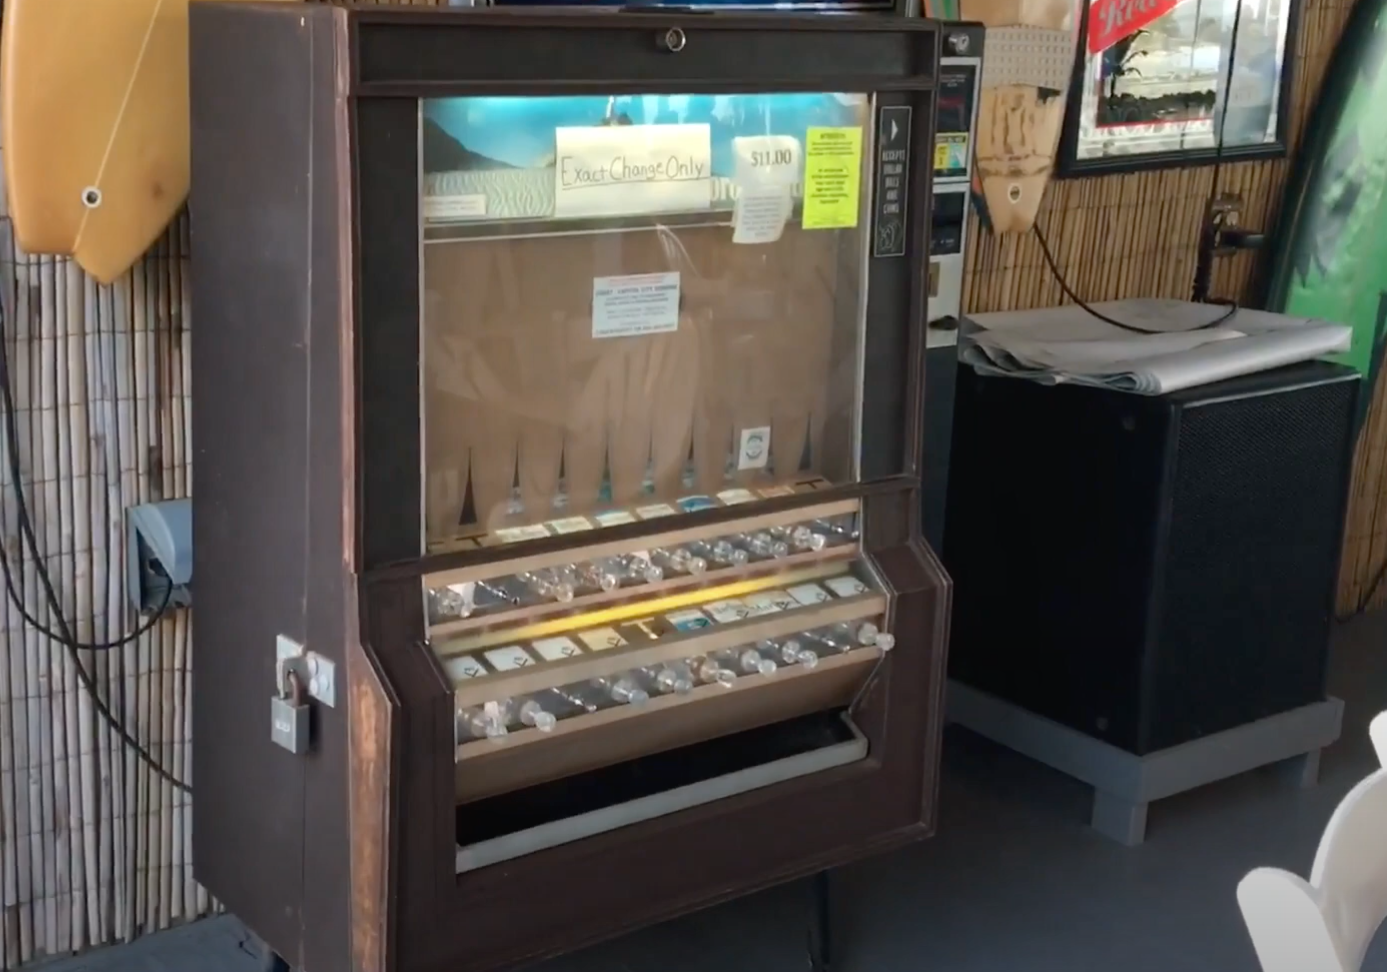 A vending machine that dispensed cigarettes